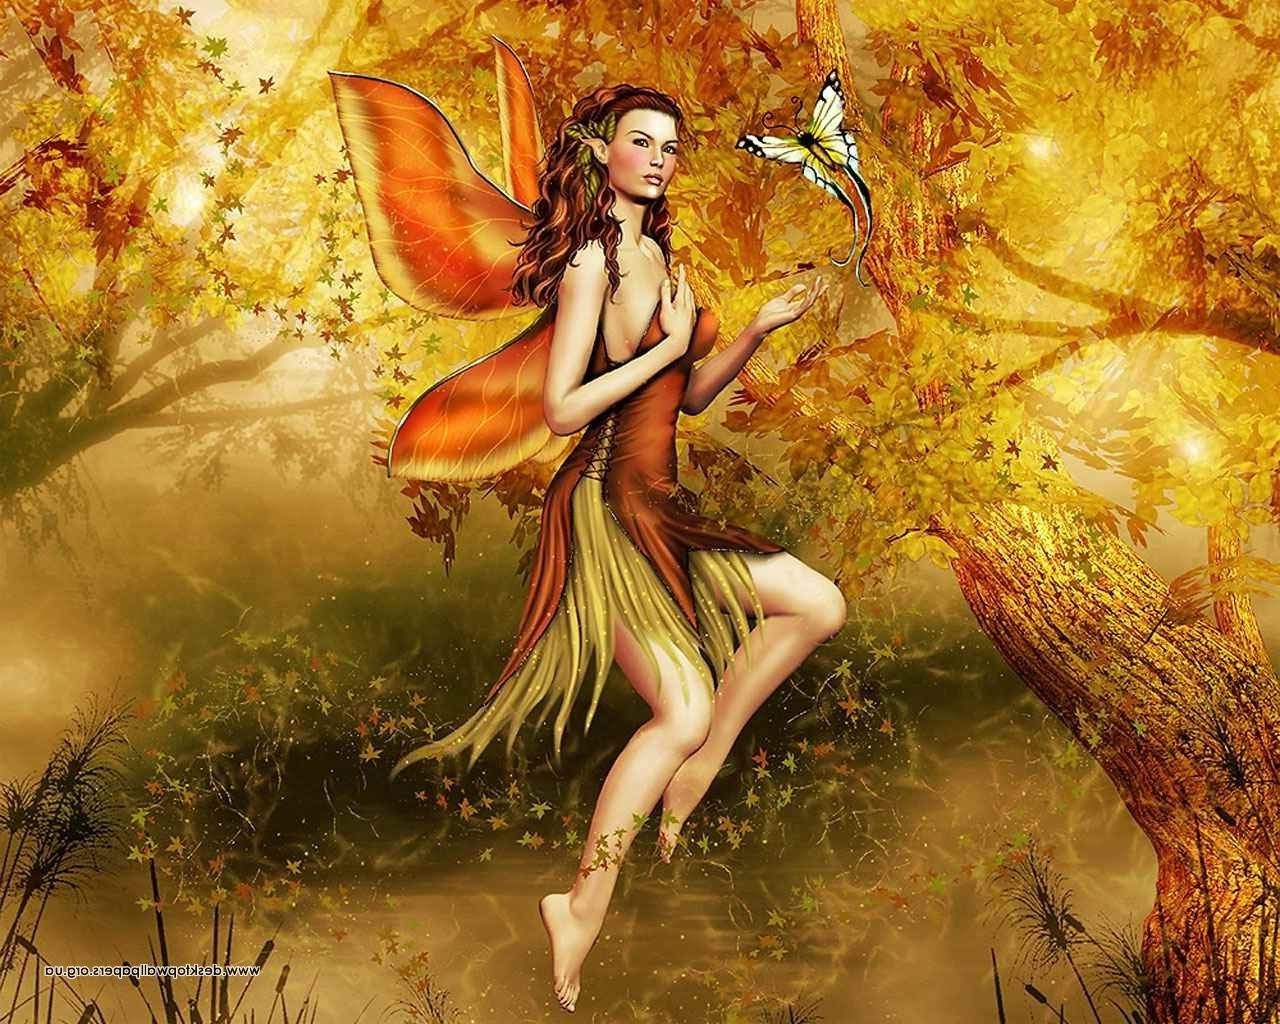 Wallpaper, fantasy art, mythology, autumn, fairy, 1280x1024 px, fictional character, mythical creature 1280x1024